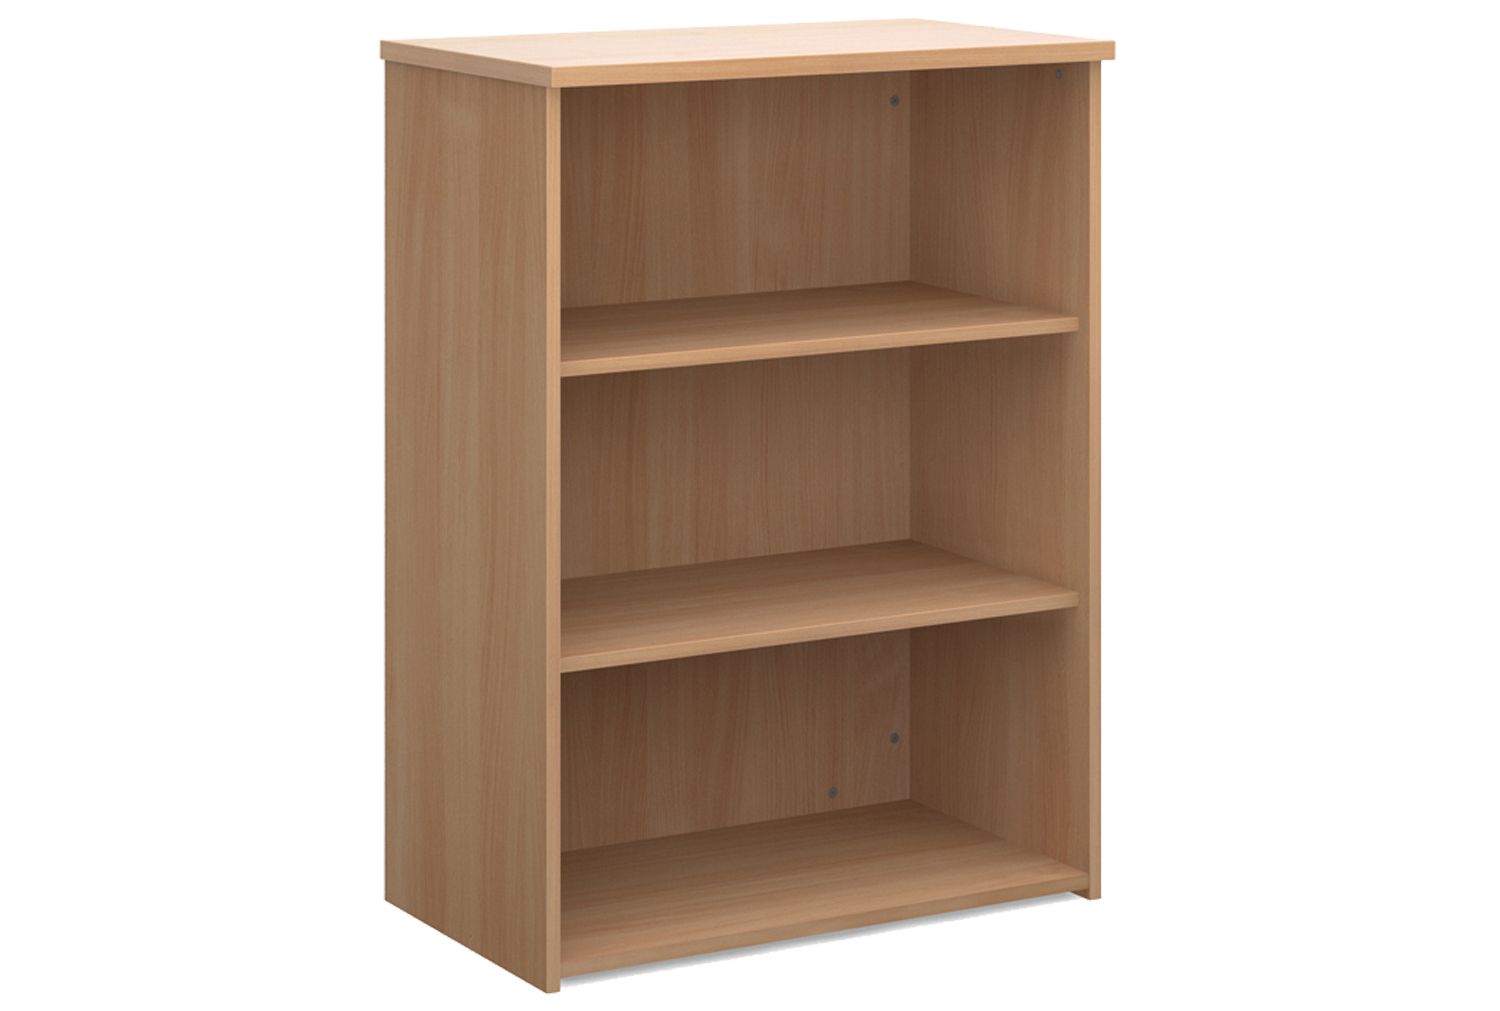 Value Line Office Bookcases, 2 Shelf - 80wx47dx109h (cm), Beech